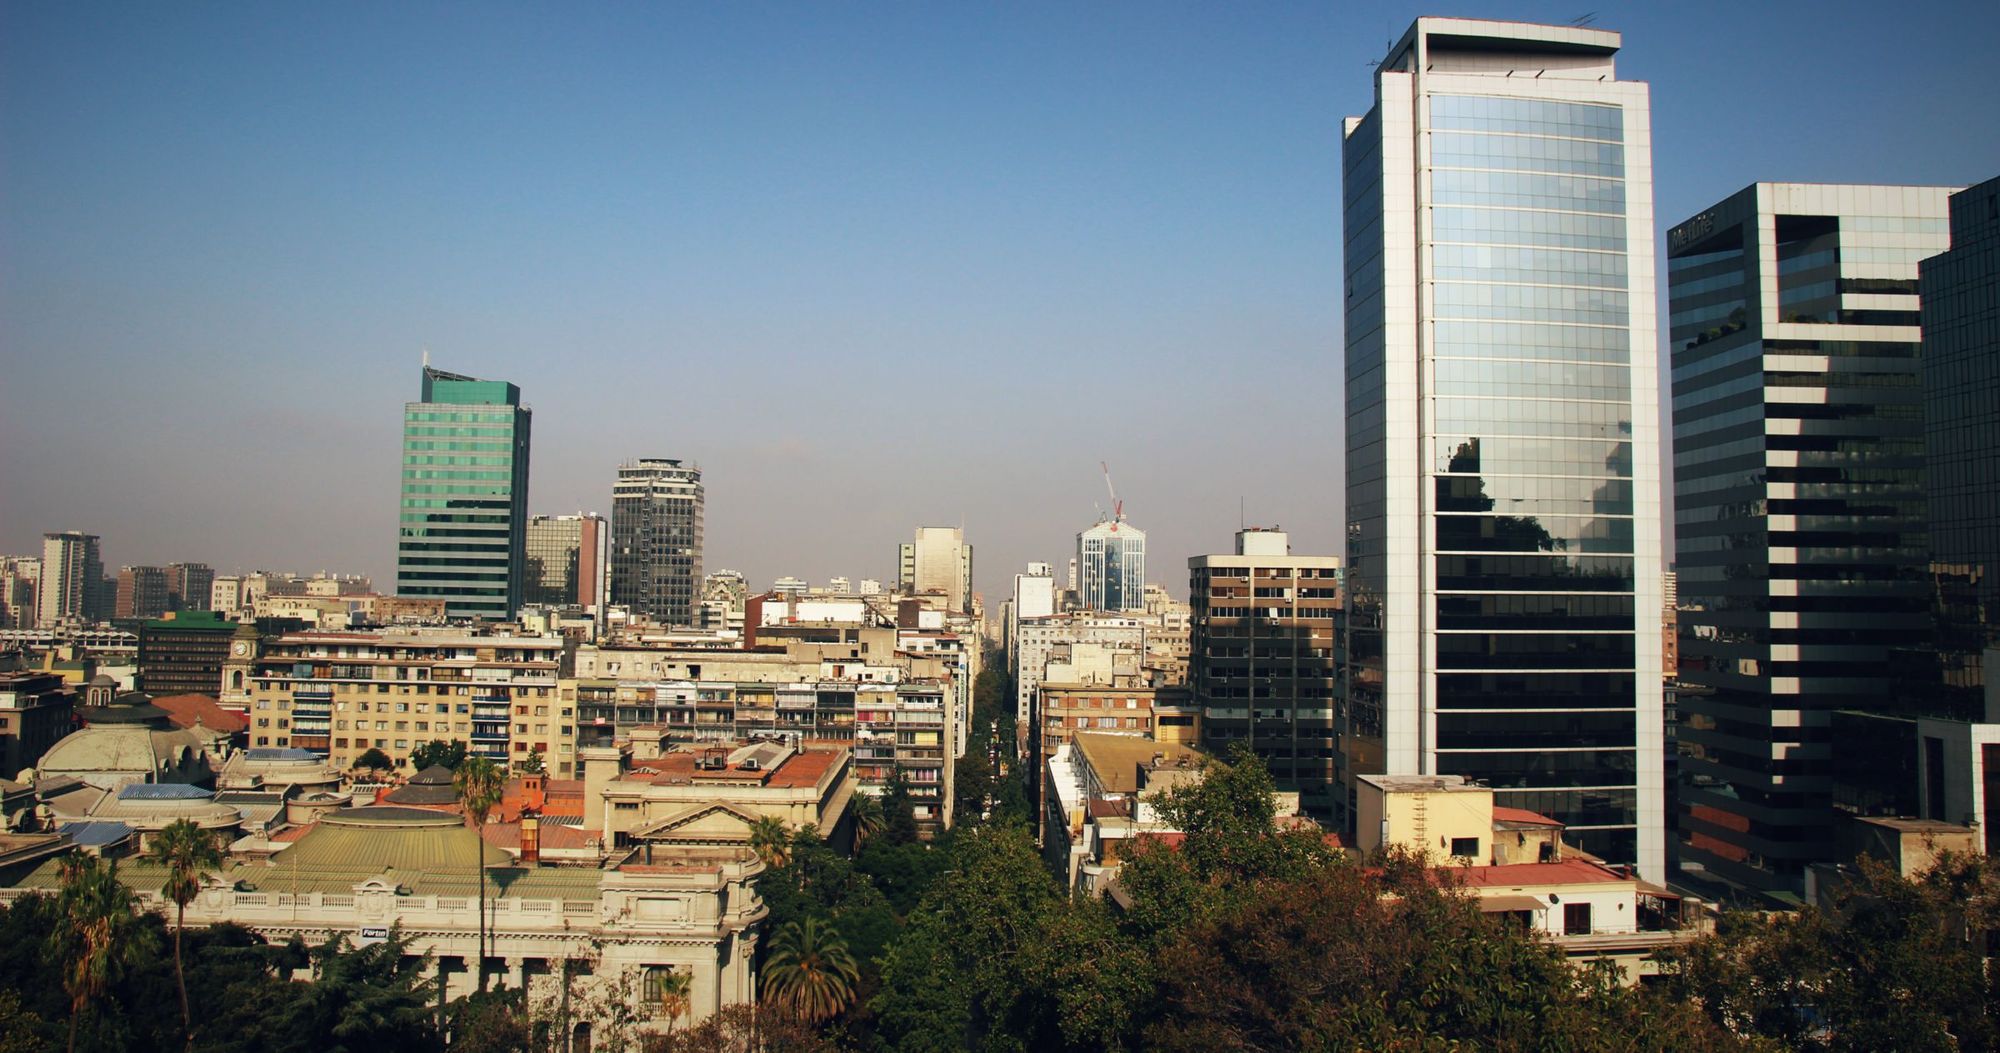 Impressions from Santiago de Chile